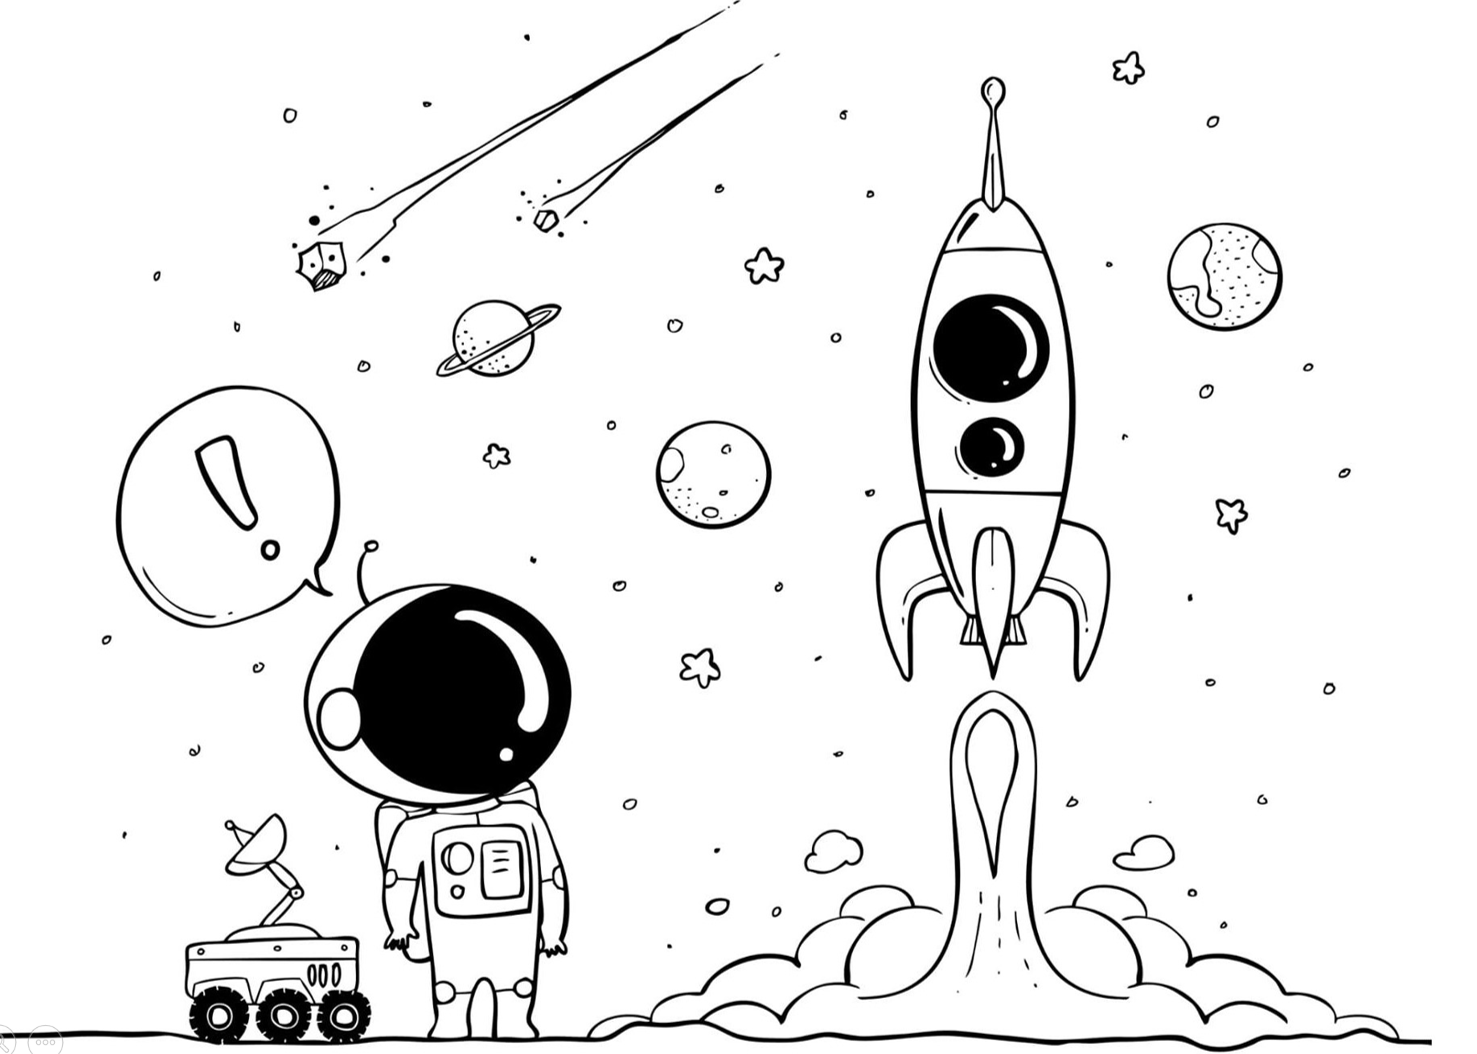 Легкие рисунки про космос. Рисунок на тему космос. Рисунок на тему космос карандашом. Рисунок на тему космос карандашом для срисовки. Космический рисунок карандашом.